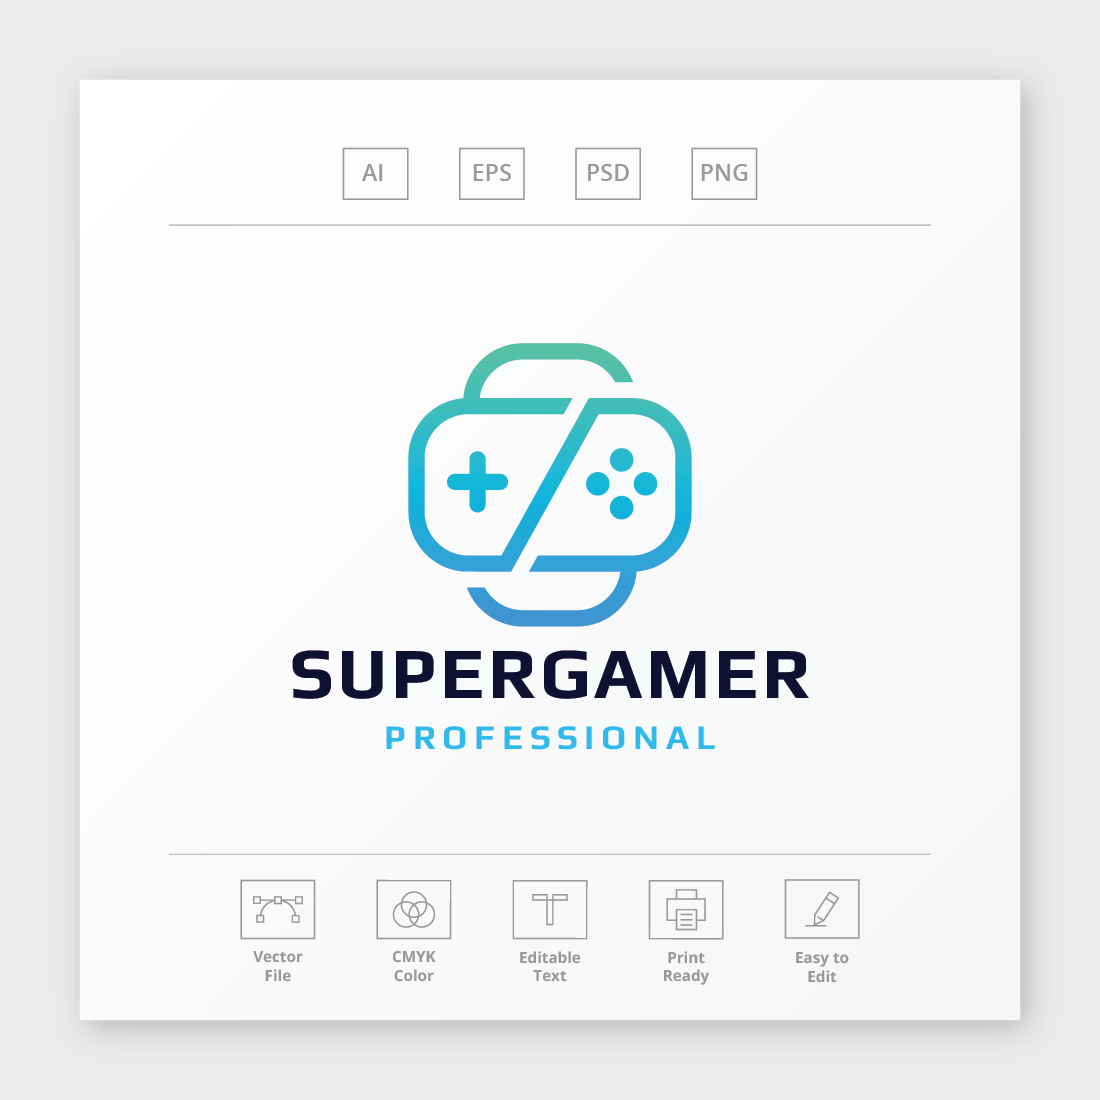 Super Gamer Letter S Logo cover image.